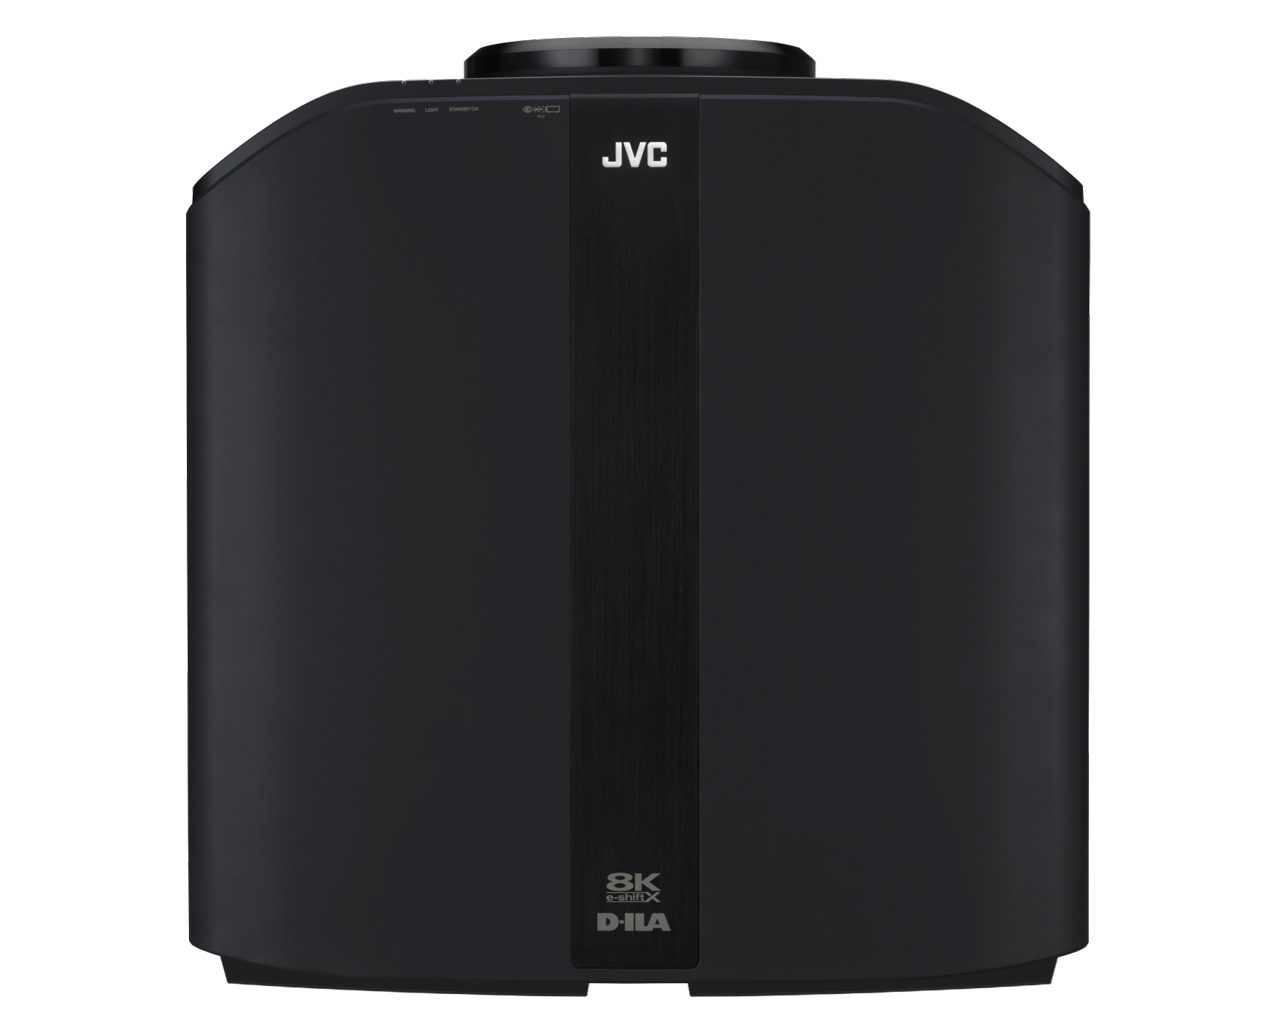 JVC DLA-NZ9 - 8K UHD Projector